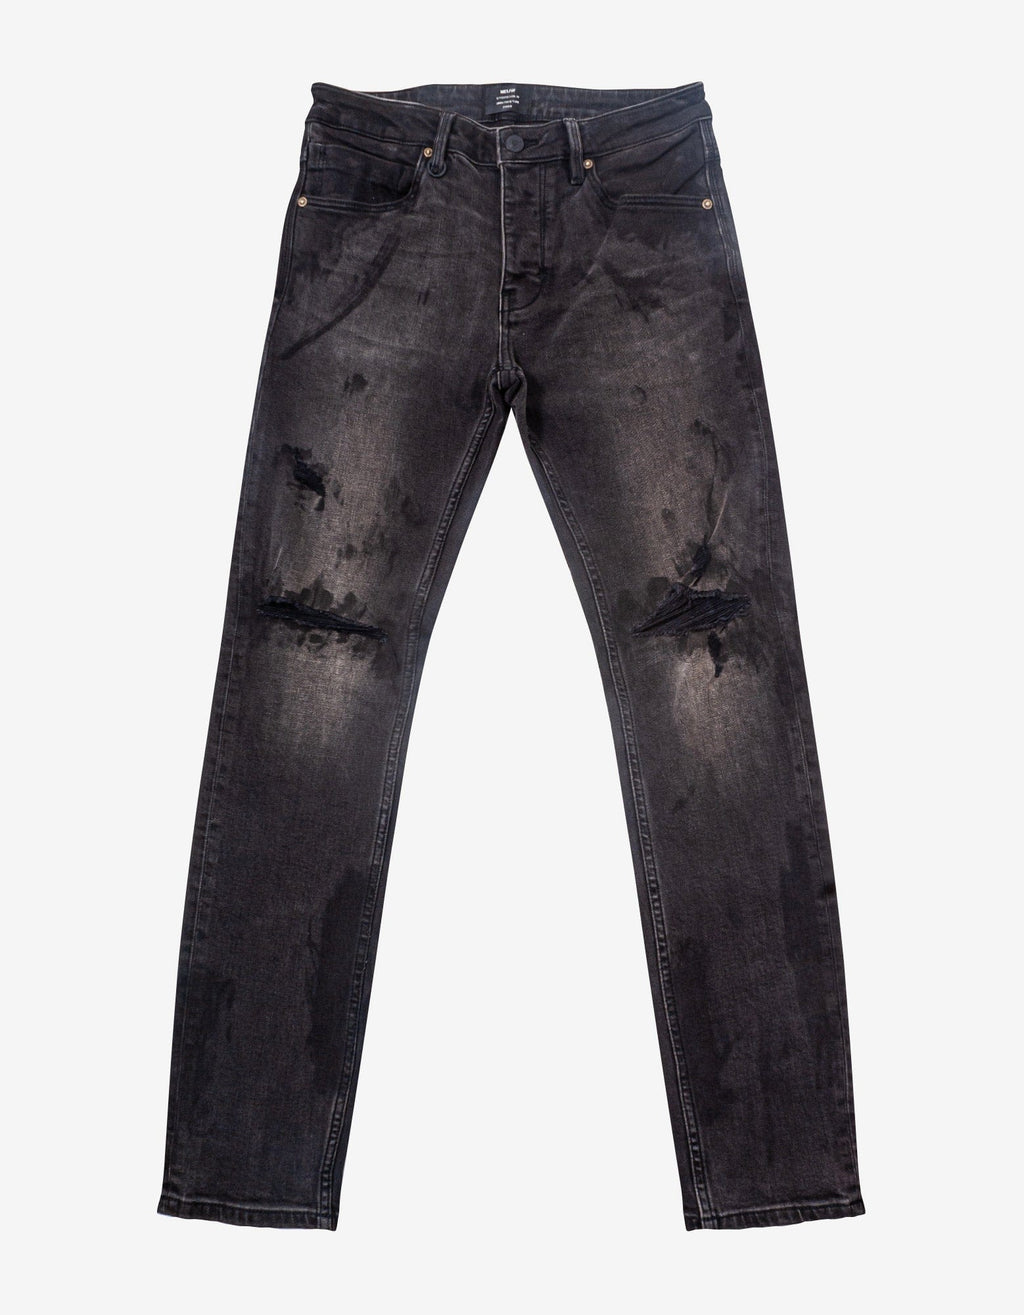 Neuw Neuw Iggy Skinny Brut Black Art Jeans